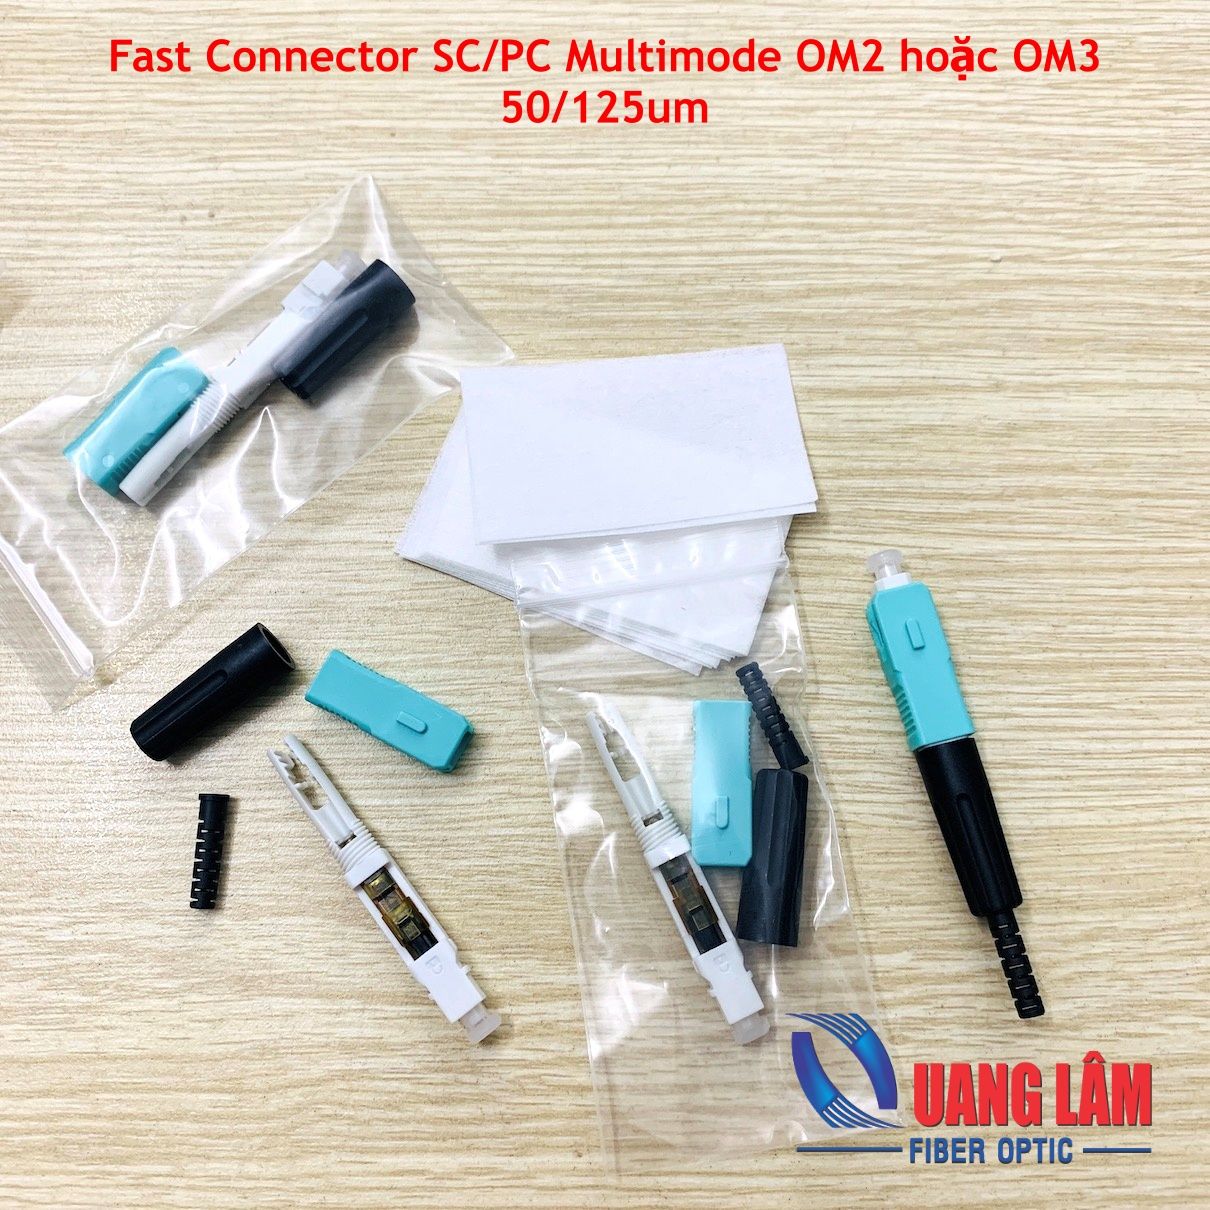 Fast Connector SC/PC Multimode OM2 OM3